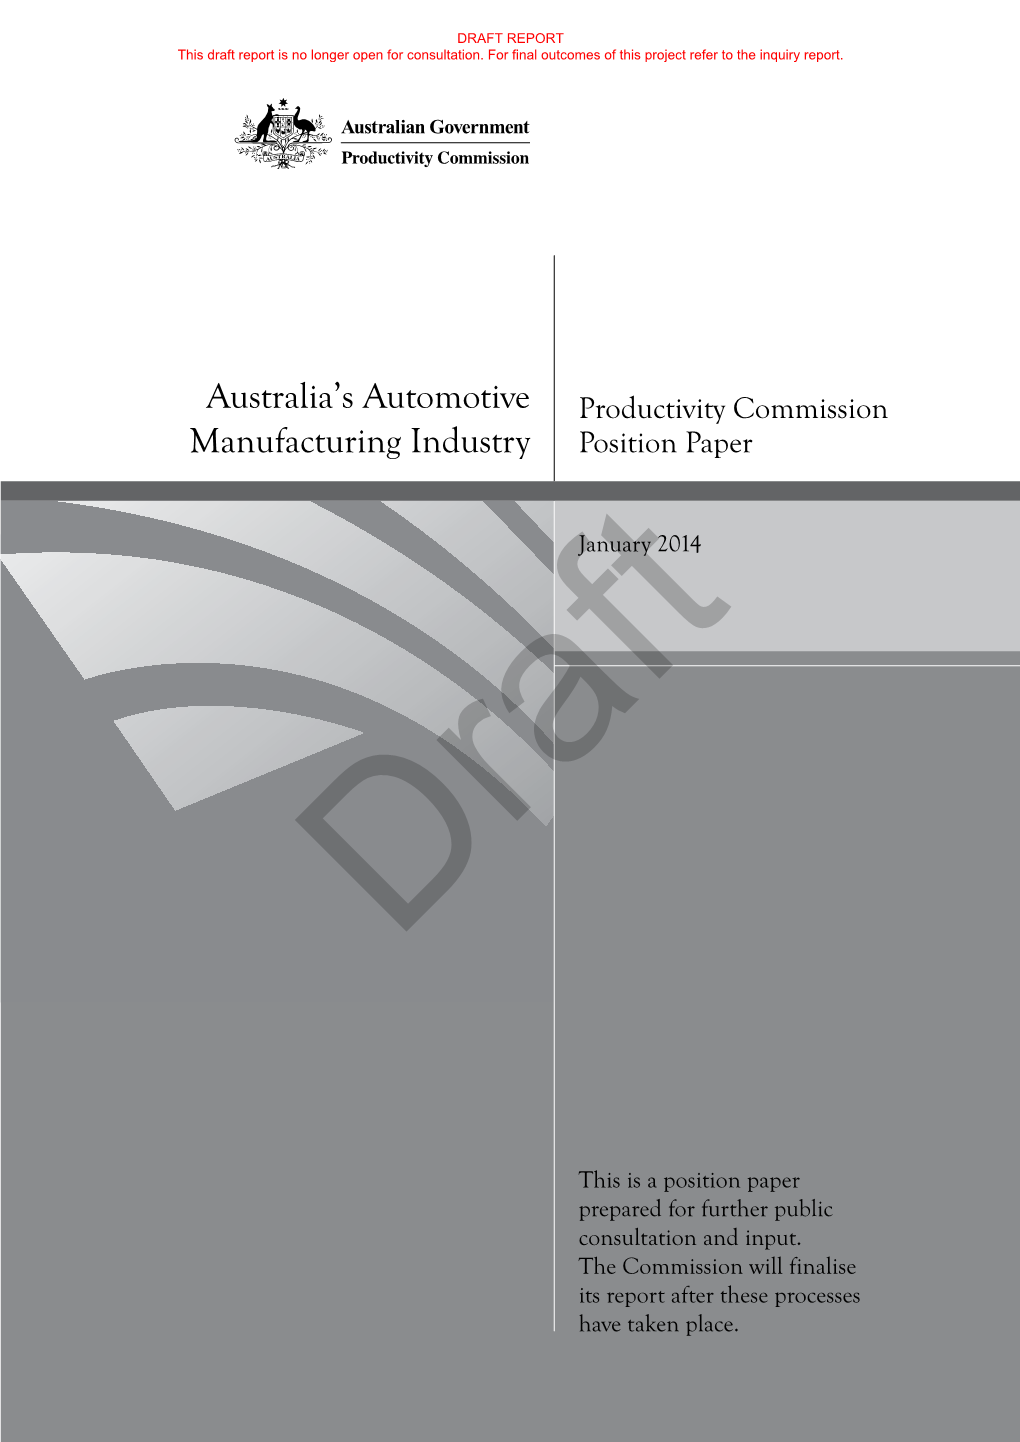 Australia's Automotive Manufacturing Industry